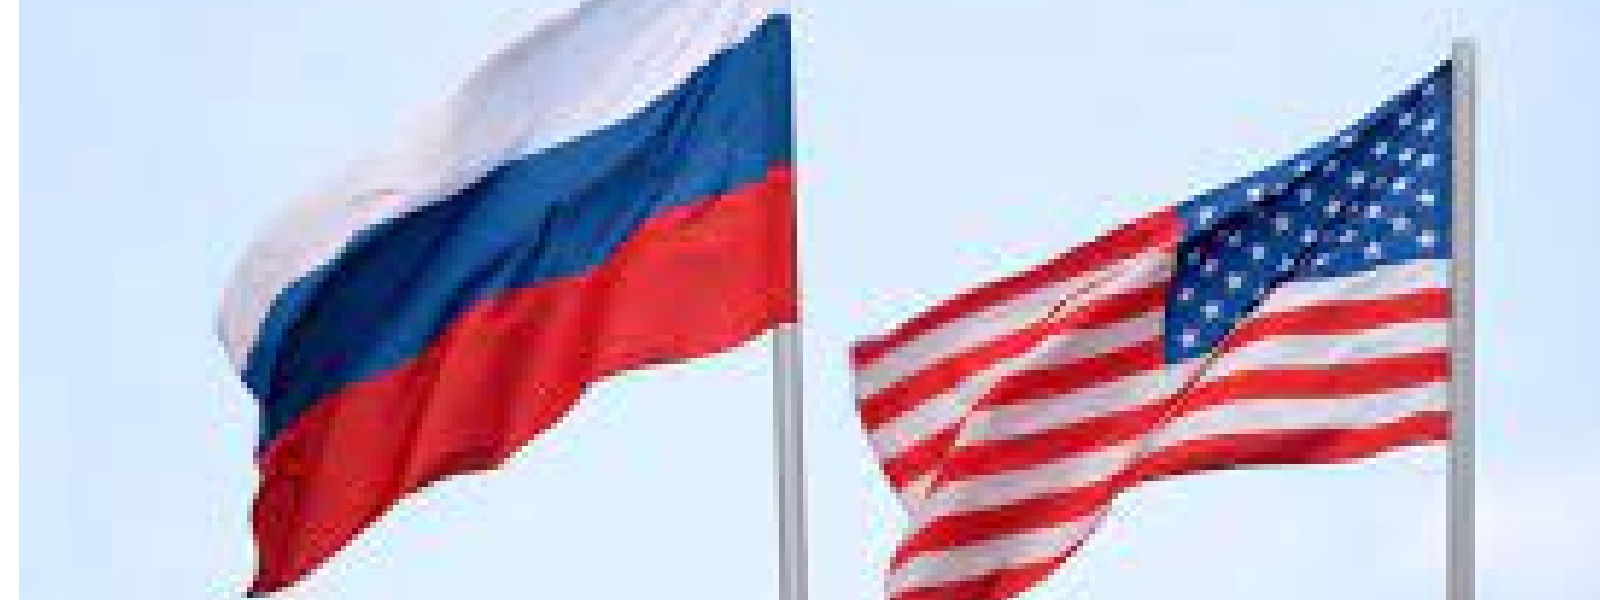 US-Russia talks begin in Geneva amid Ukraine tensions